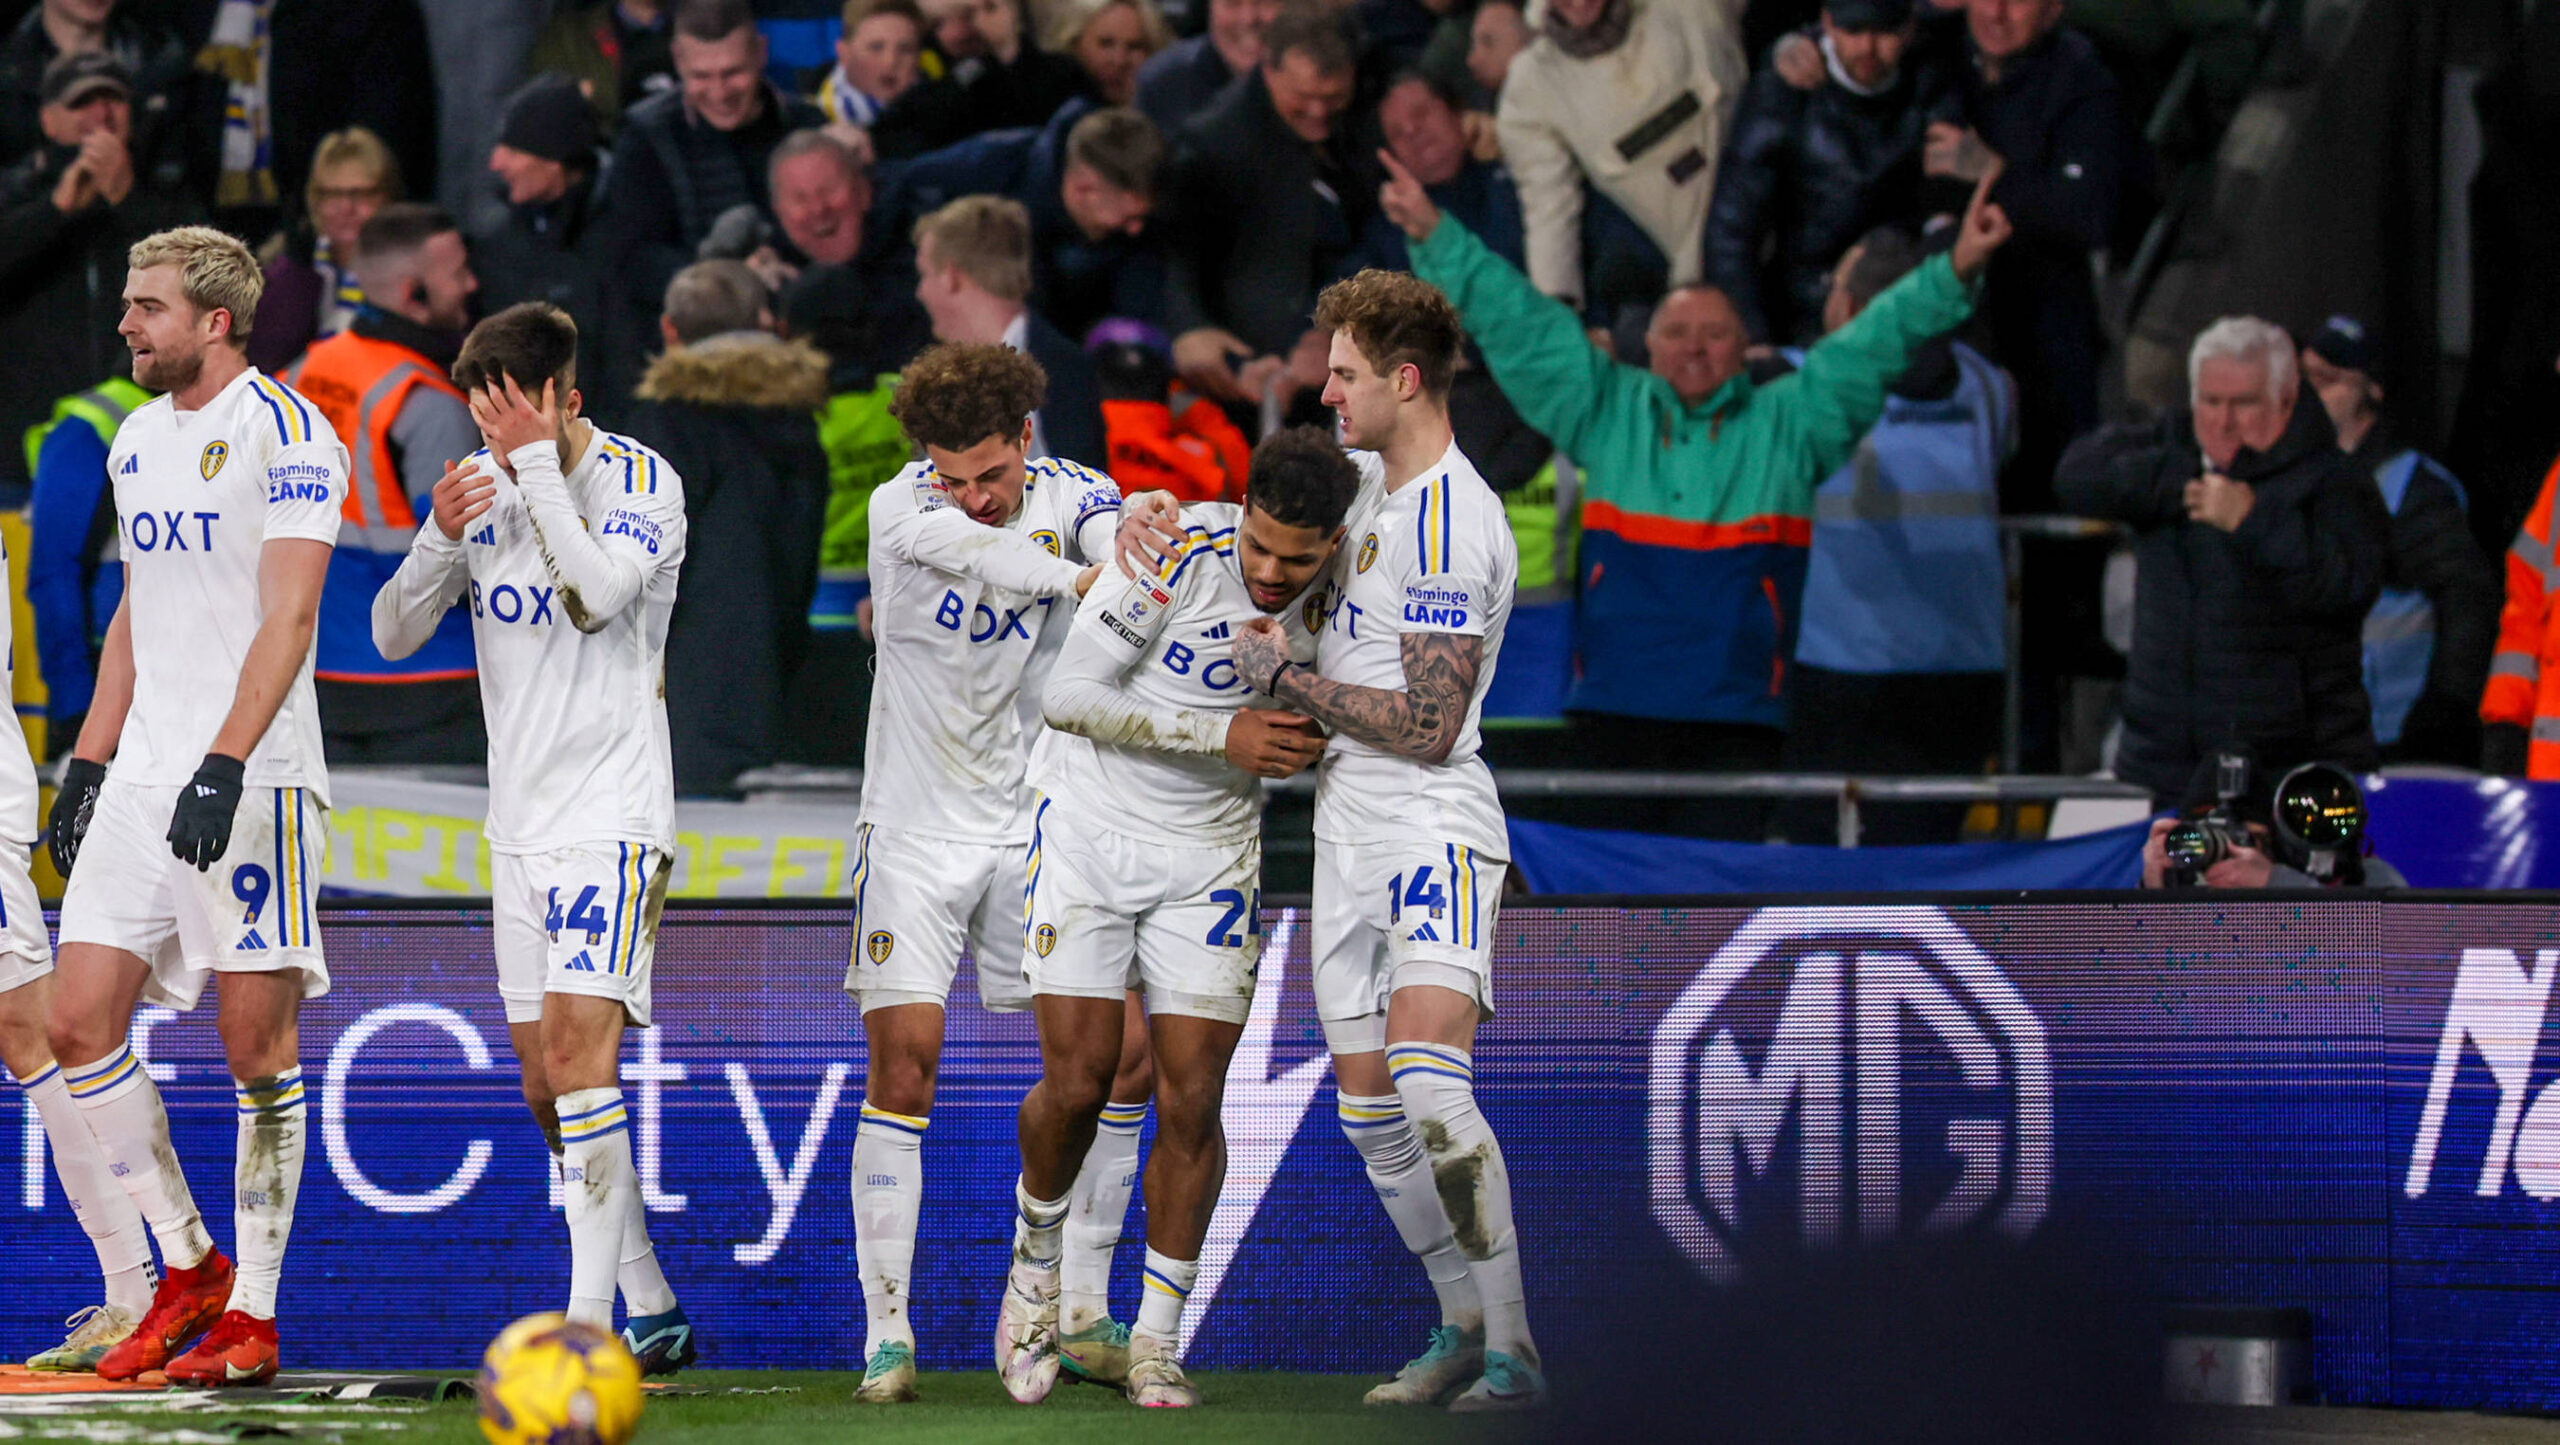 Leeds United squad celebrate a goal